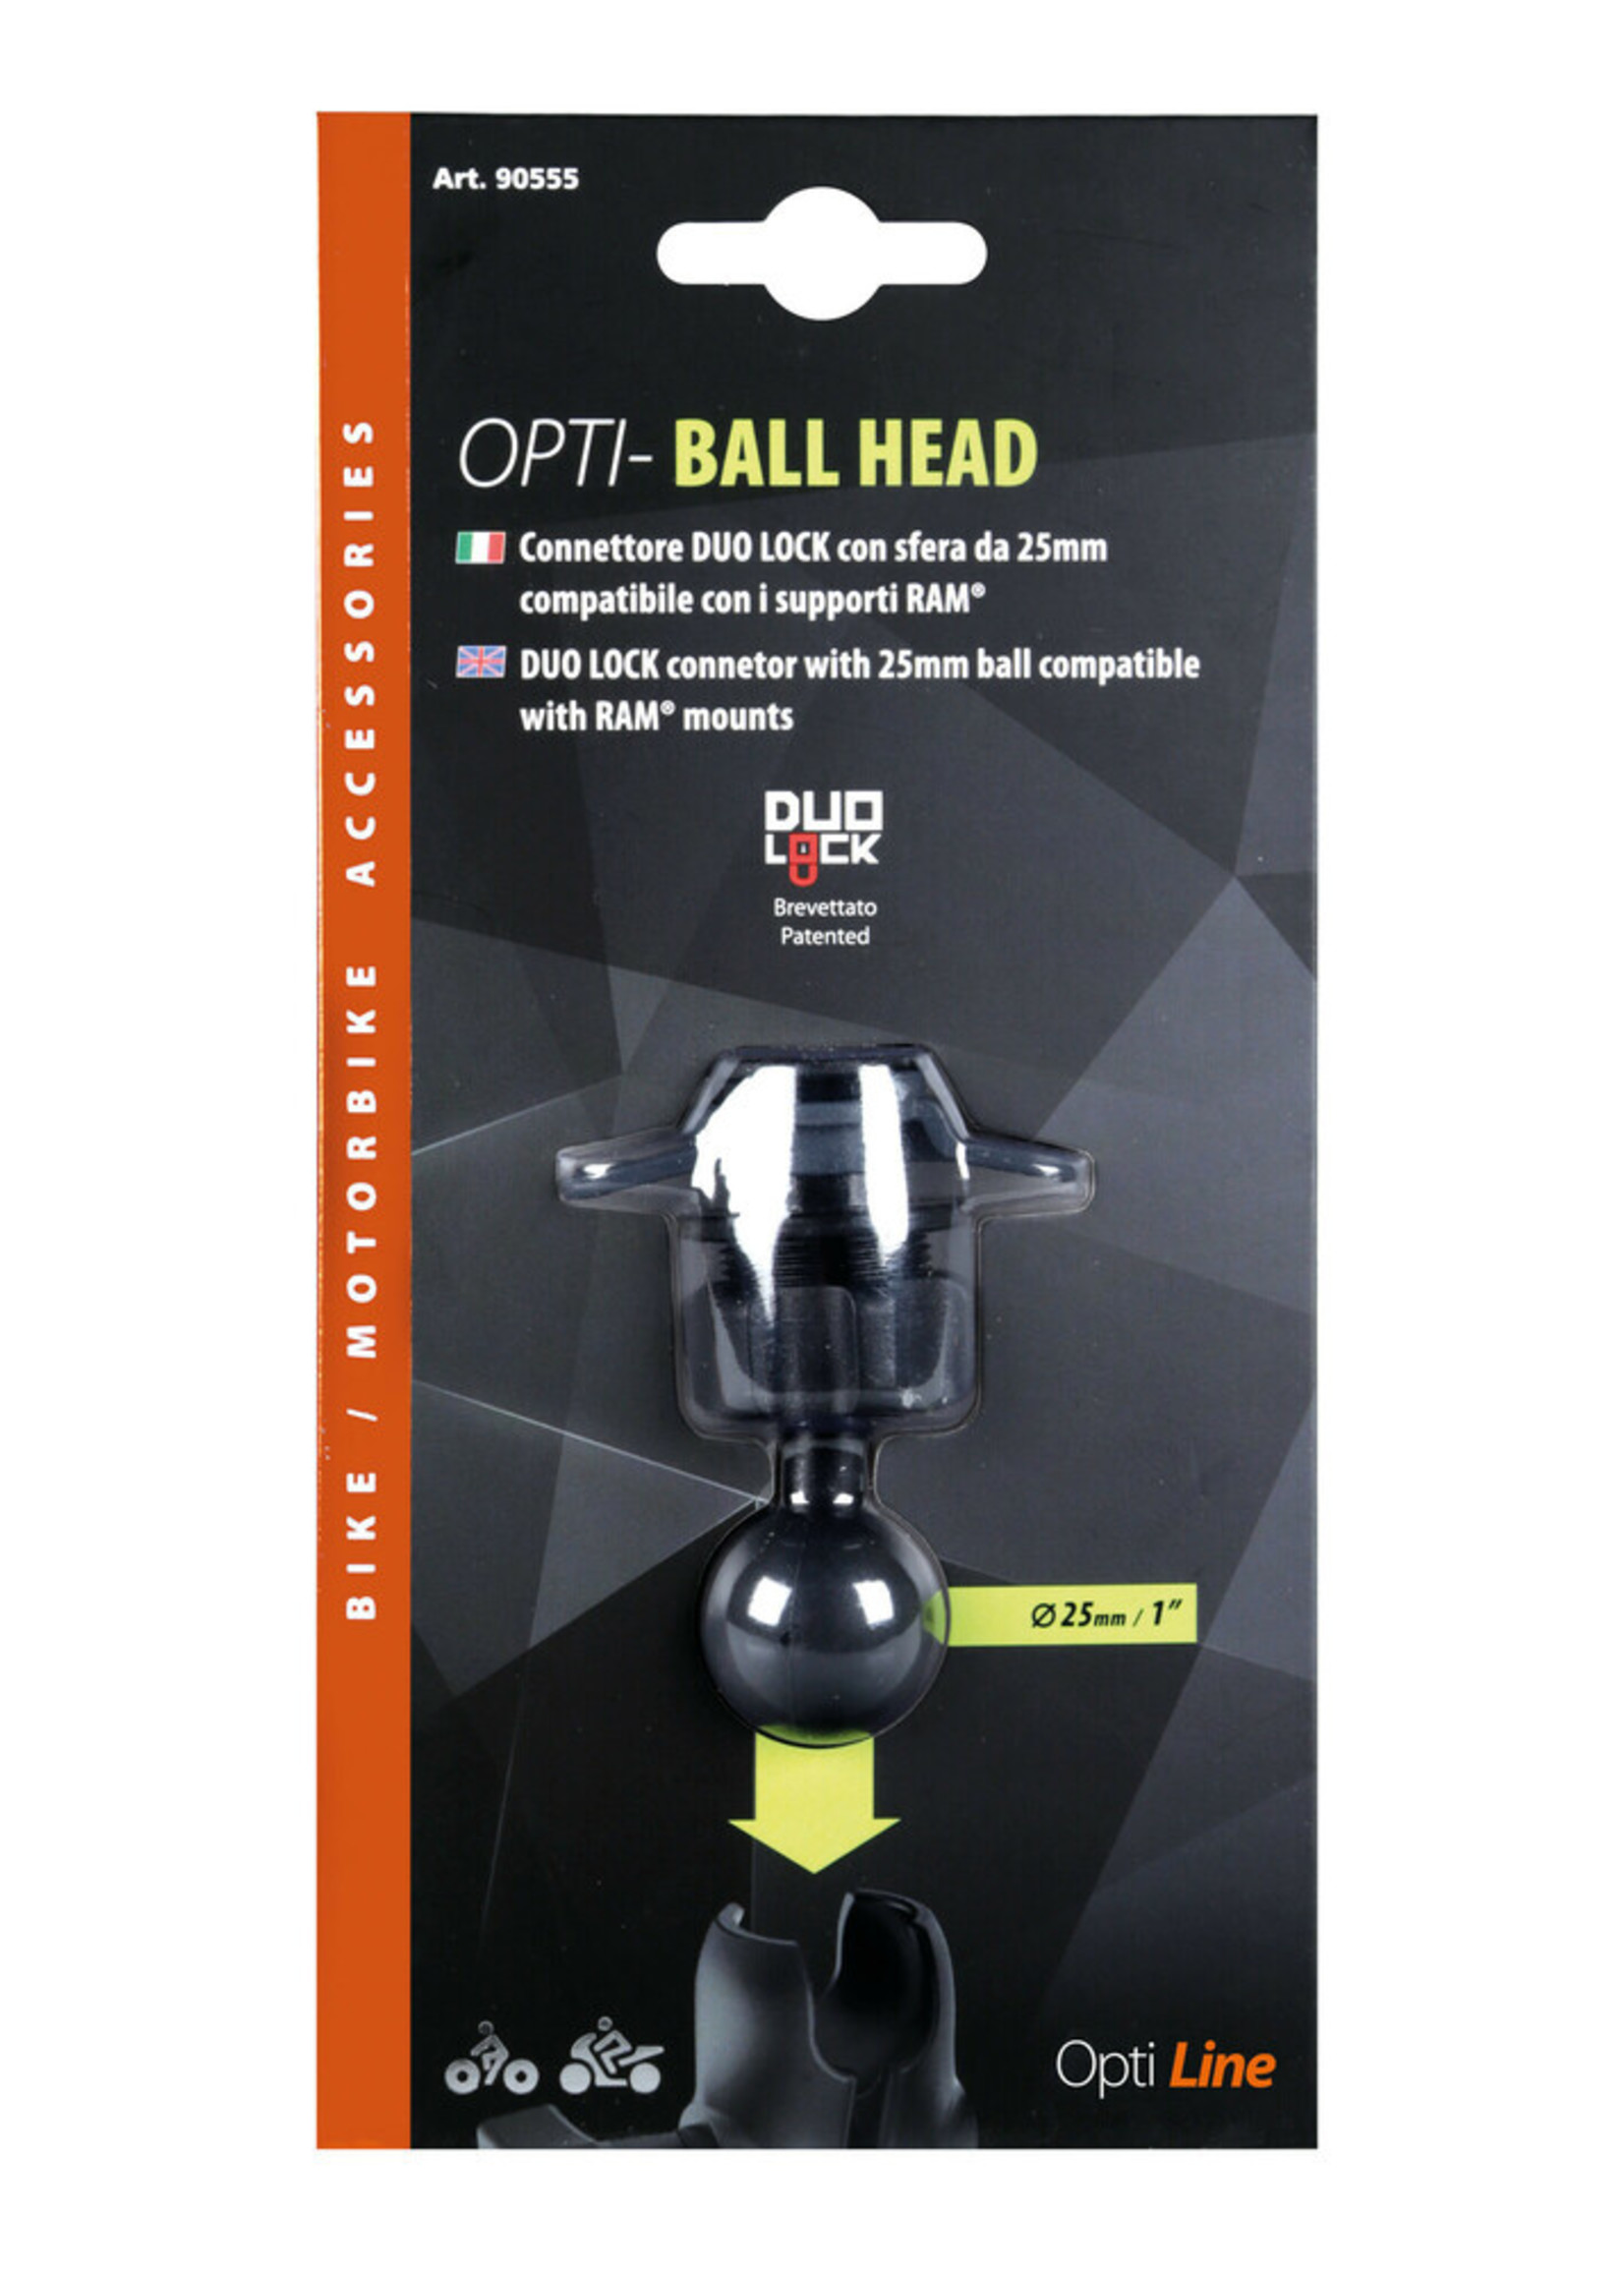 Optiline Titan Ball Head, DuoLock connector with 25 mm / 1” ball